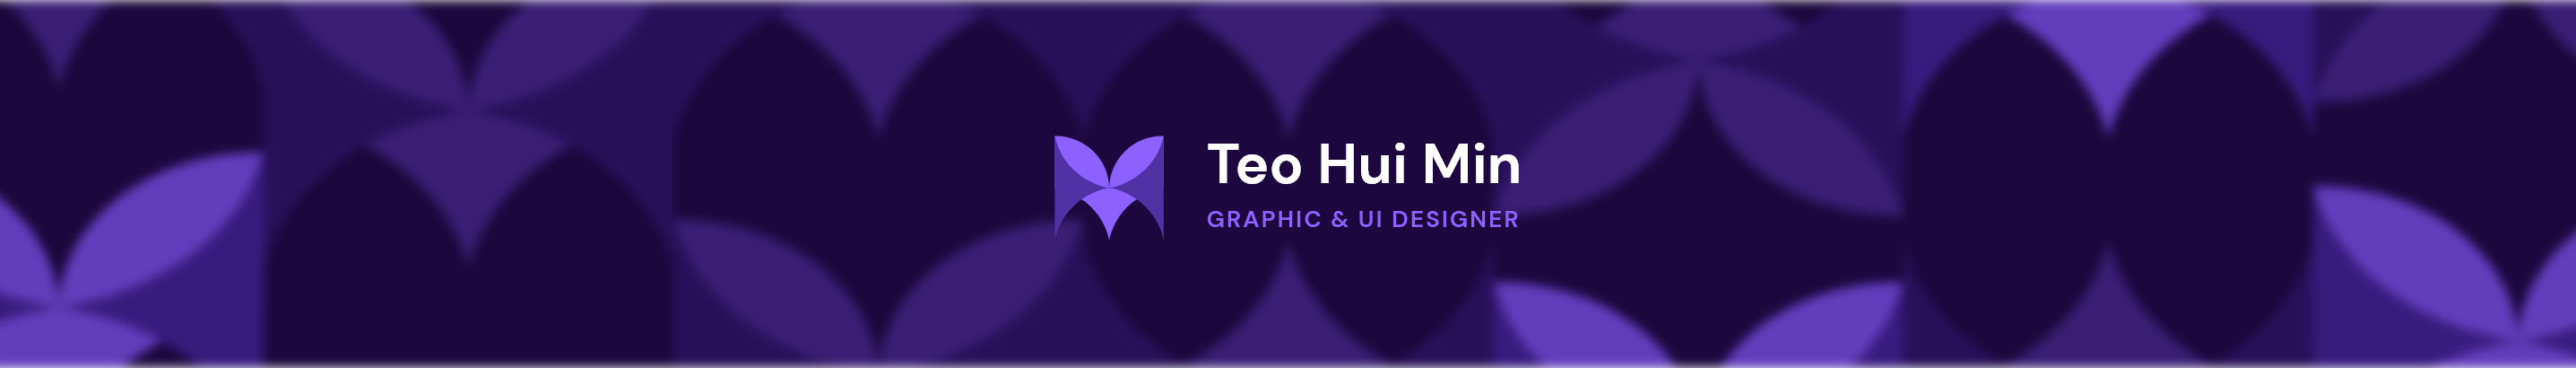 Teo Hui Mins profilbanner